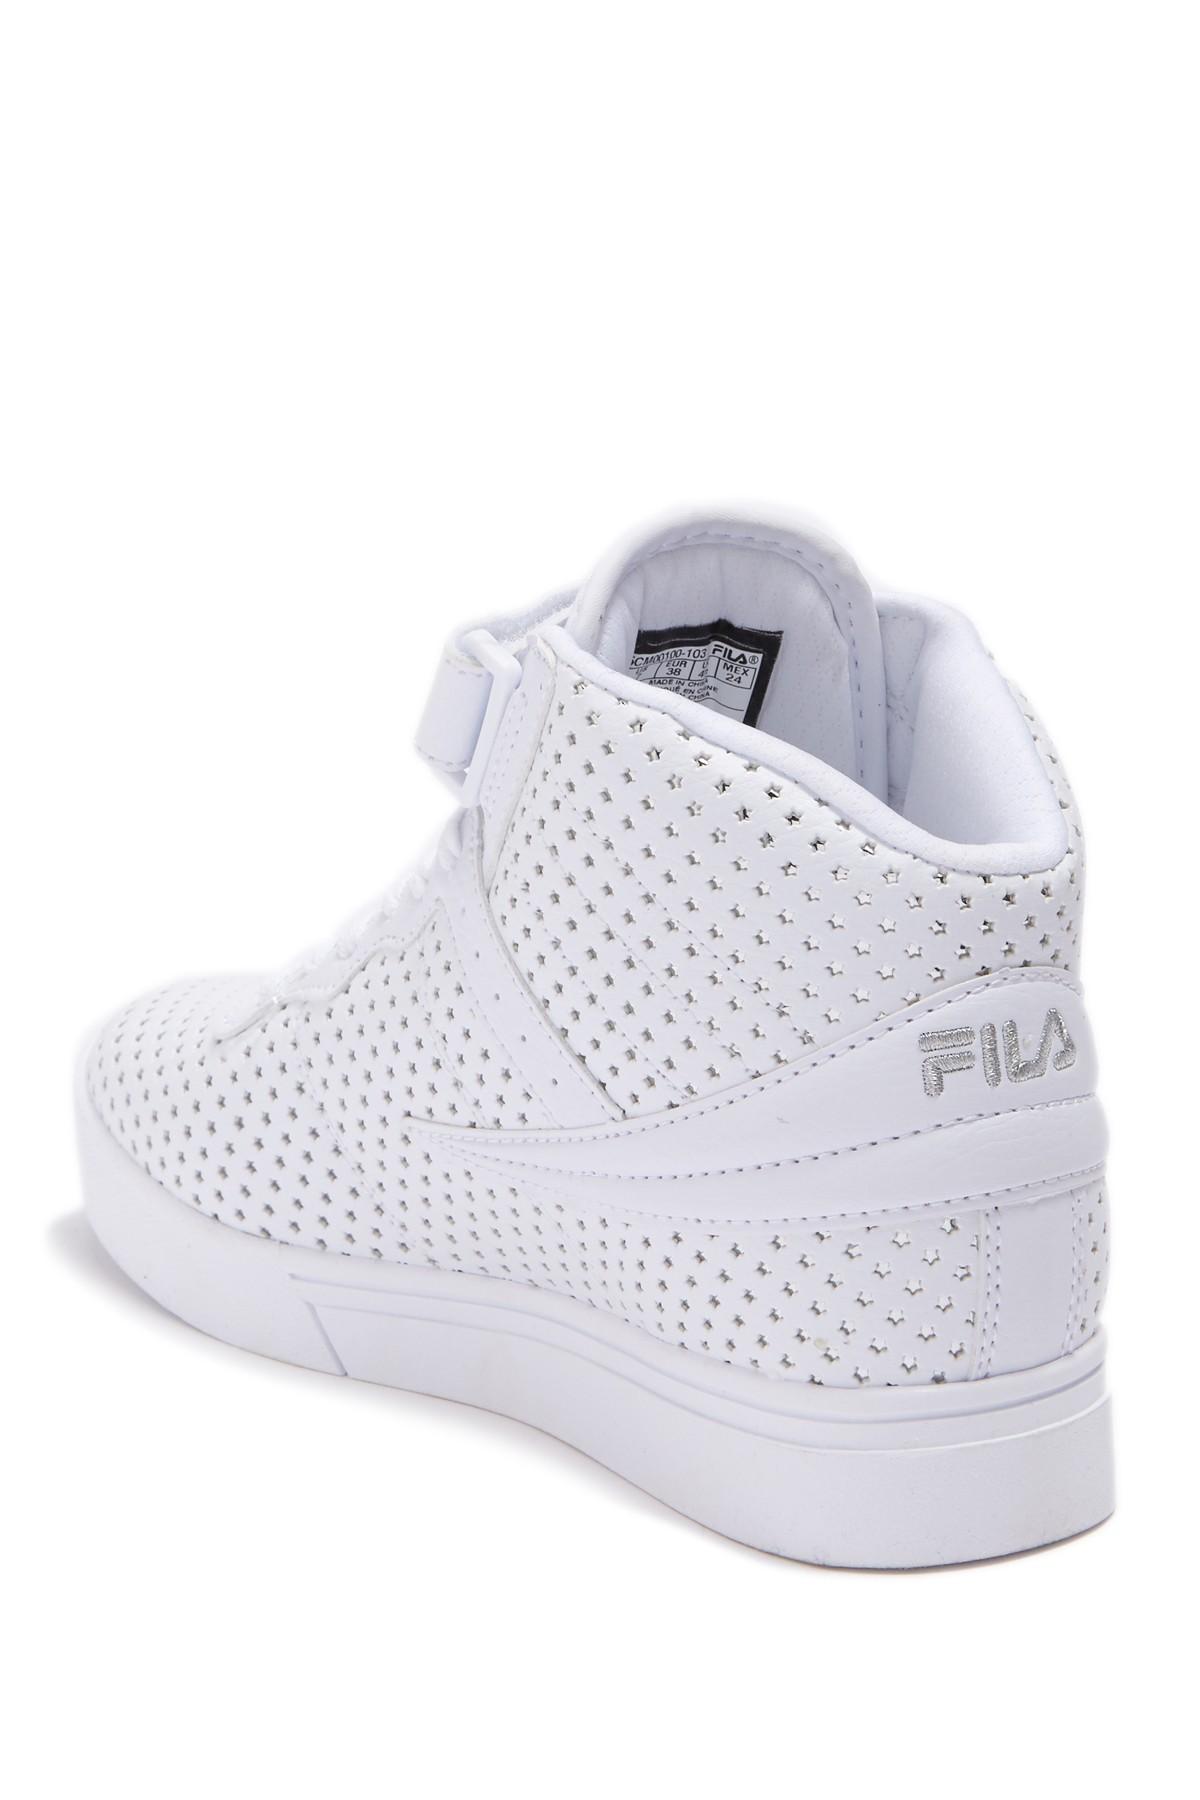 Fila Lace Vulc 13 Stars Sneaker in White - Lyst